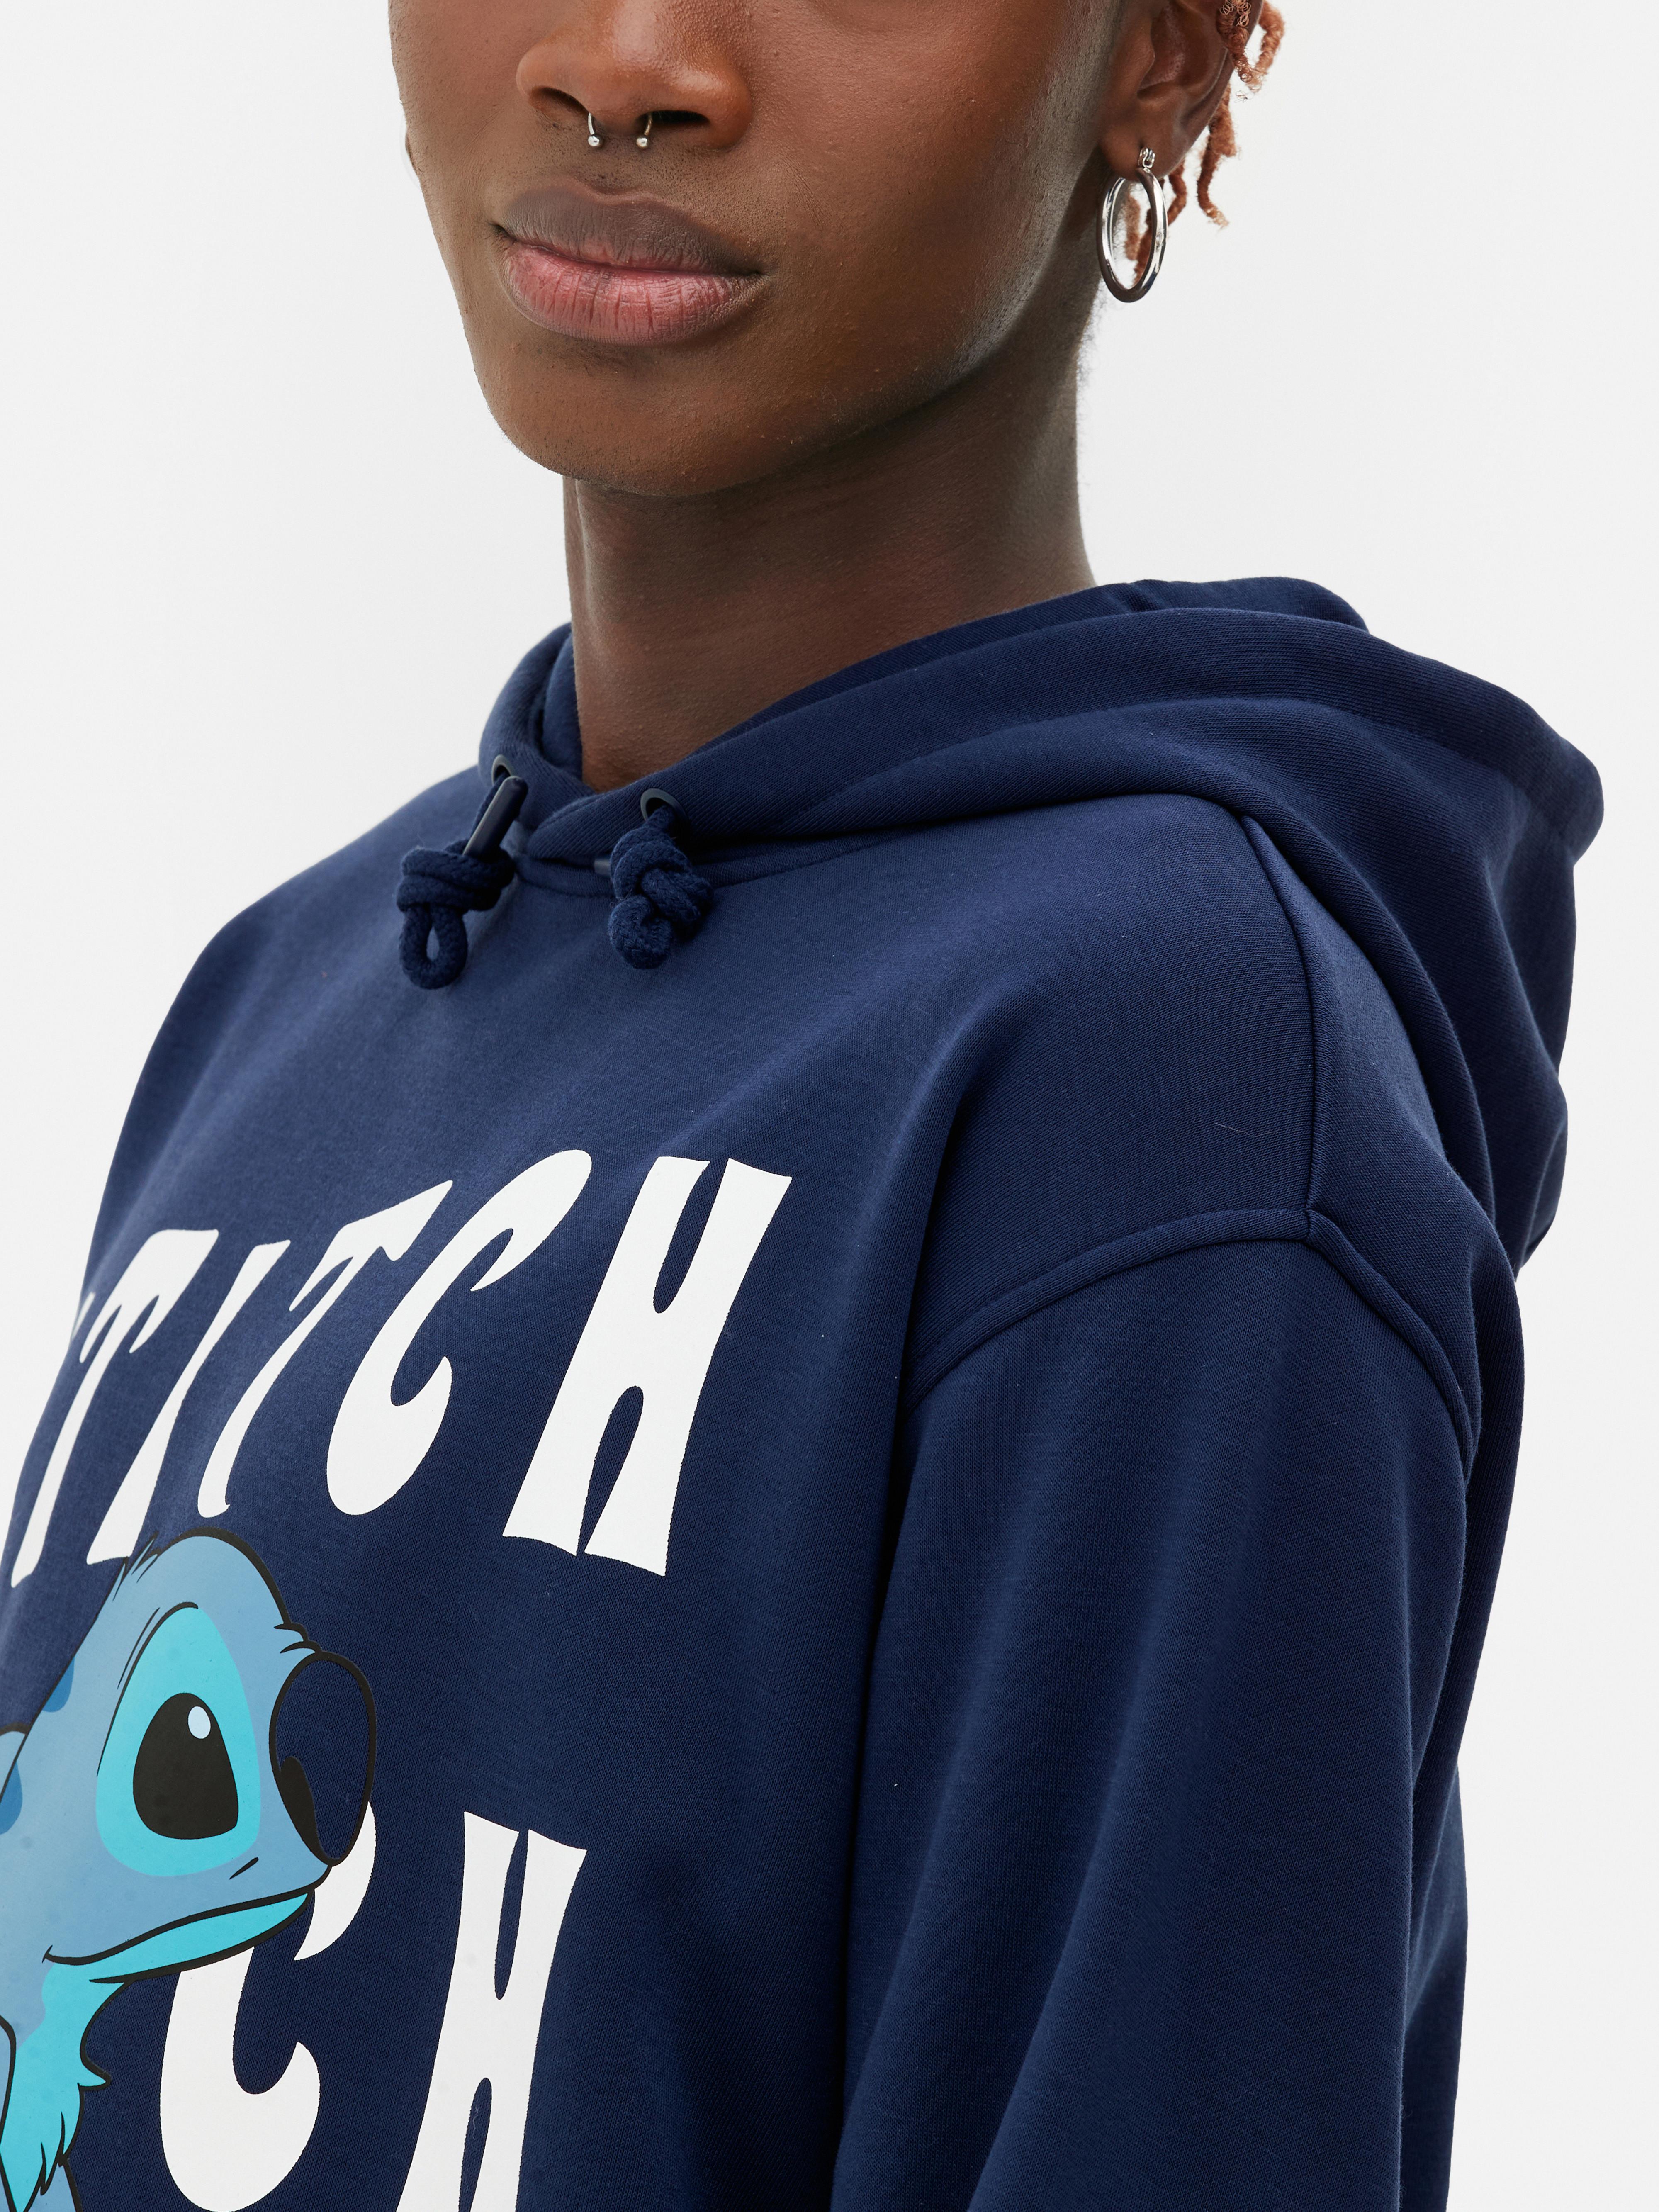 Sudadera Stitch azul oscuro Disney por solo 32,90€ –